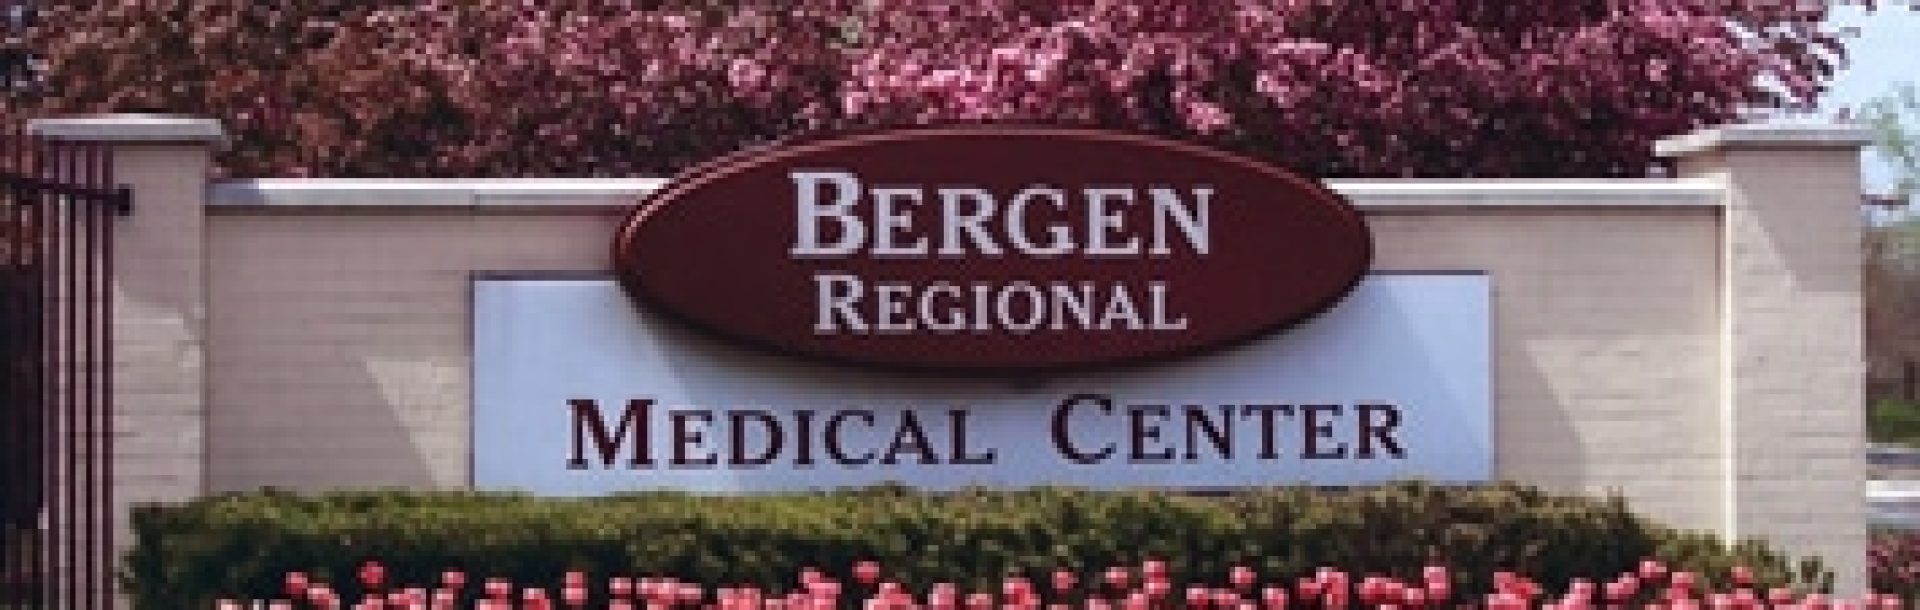 Bergen Regional Medical Center - D-1 Unit